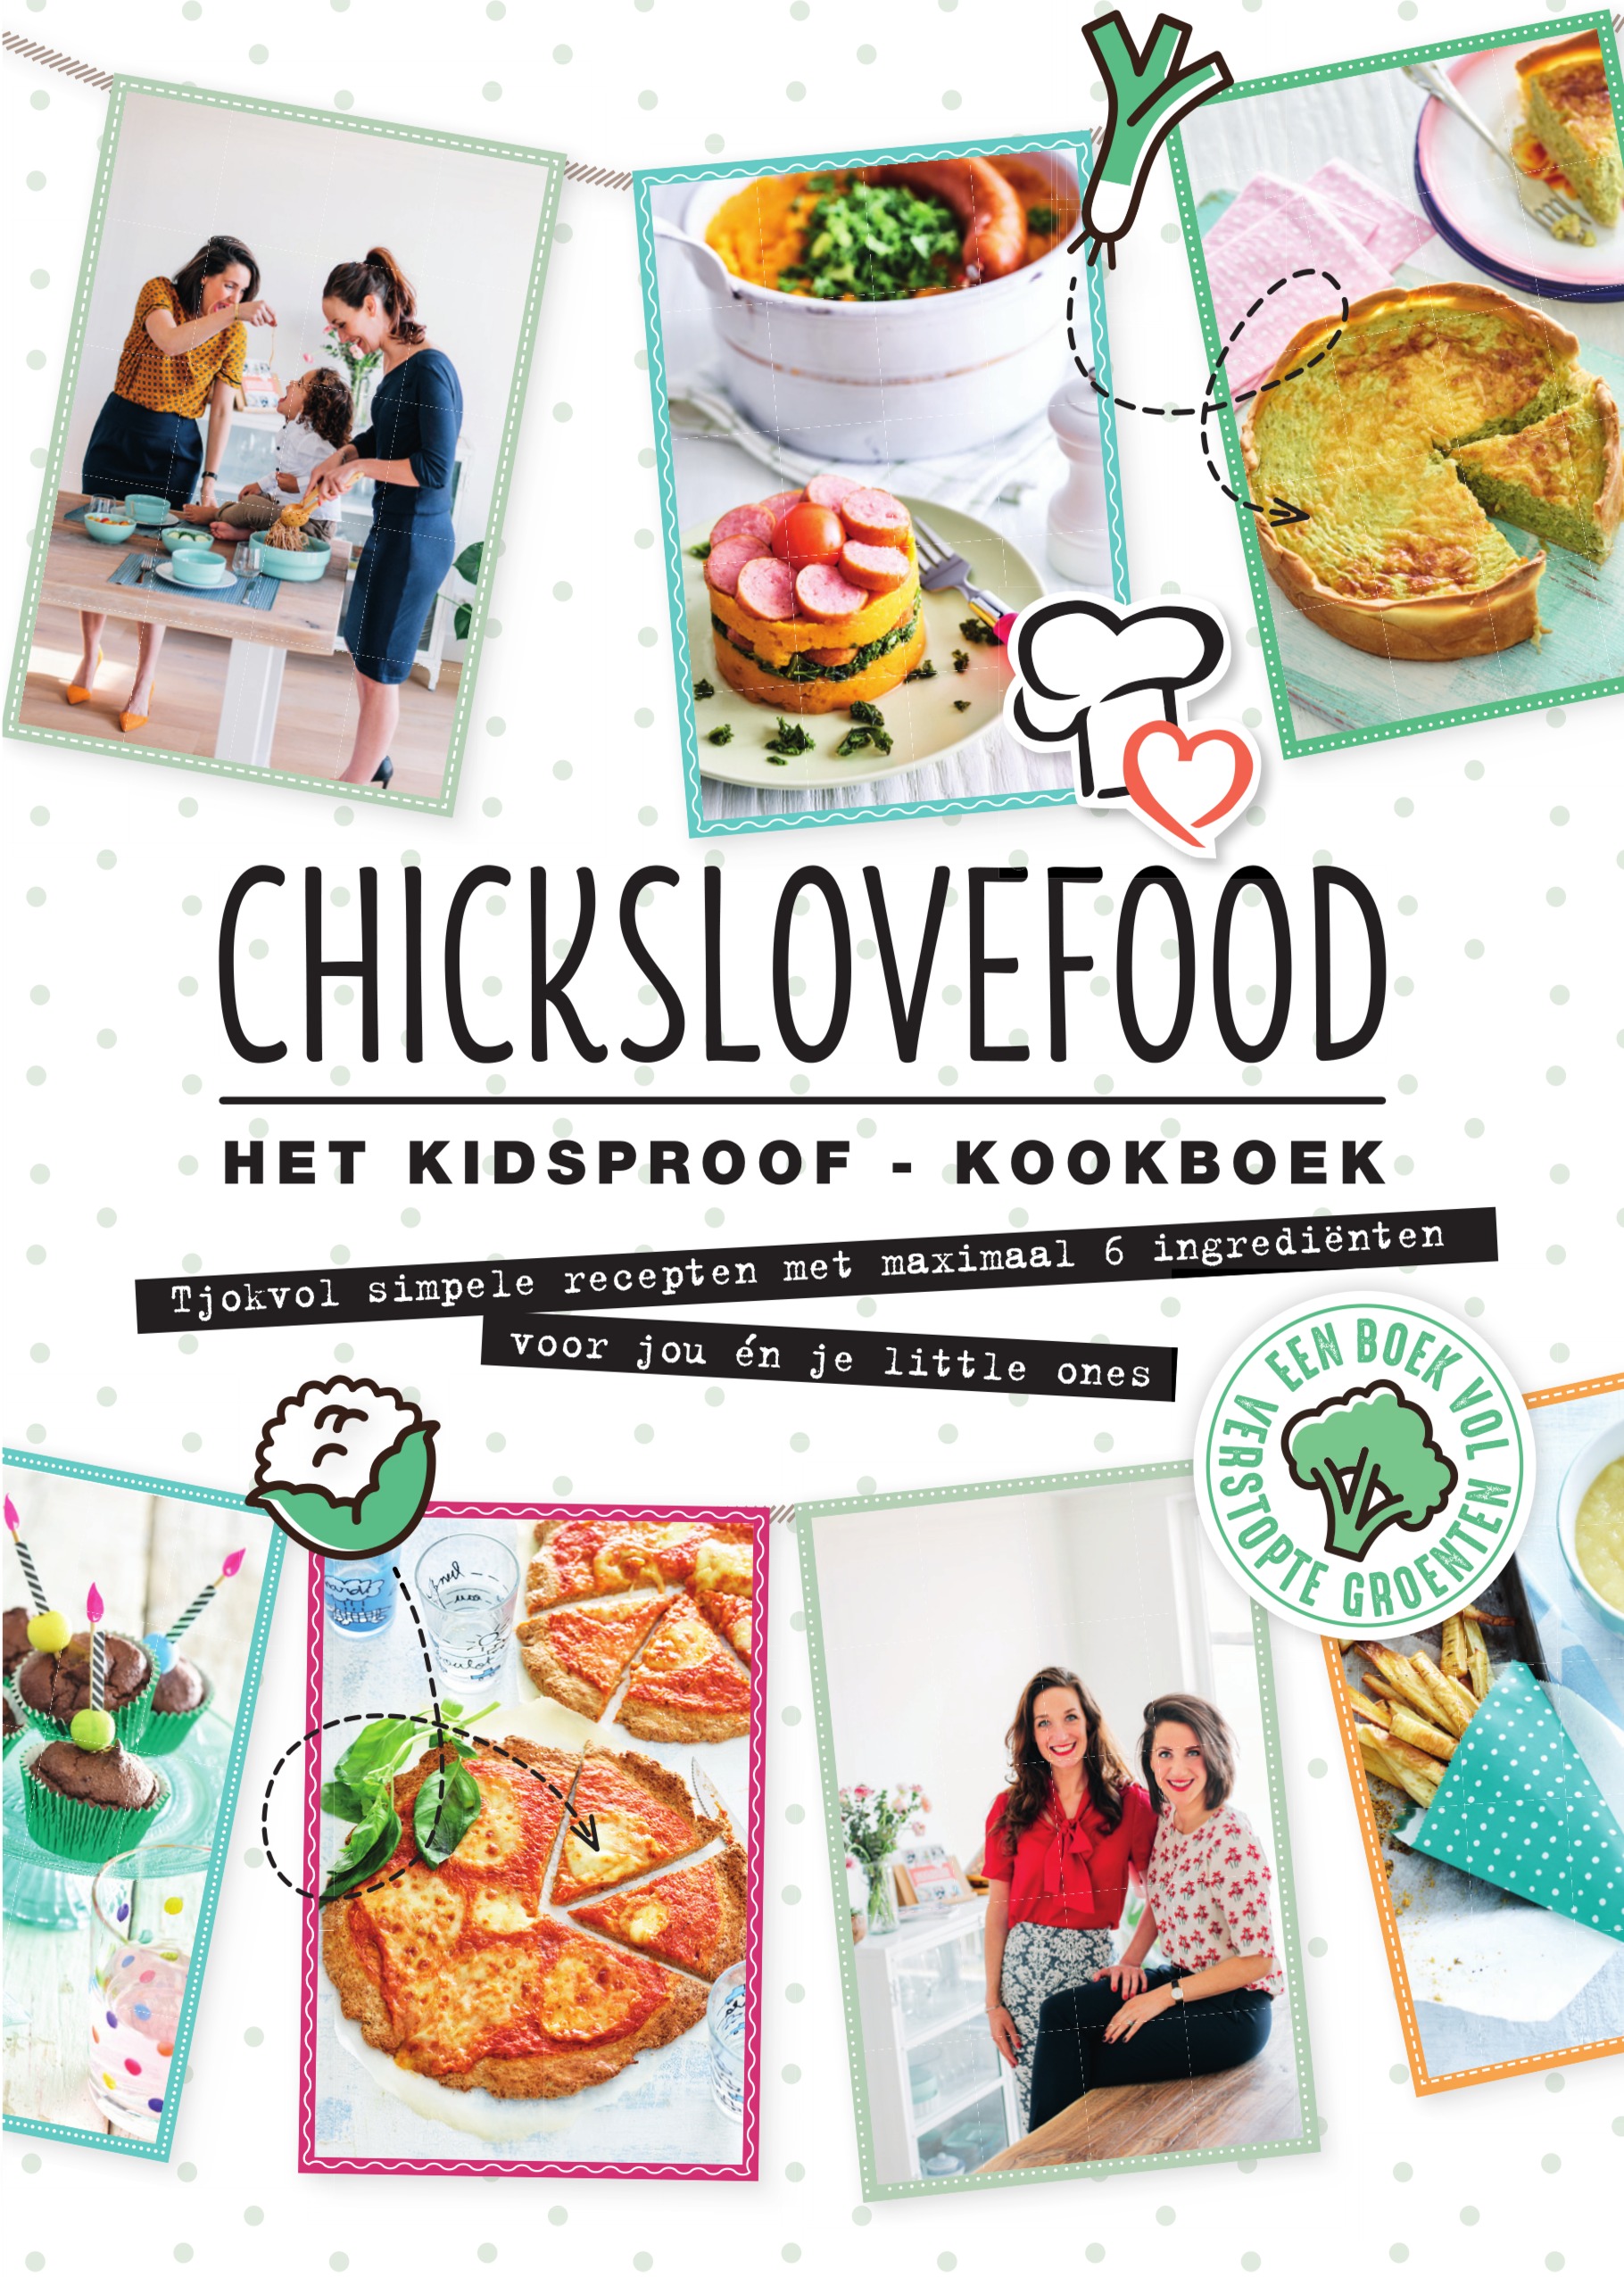 Chickslovefood Het kidsproof-kookboek